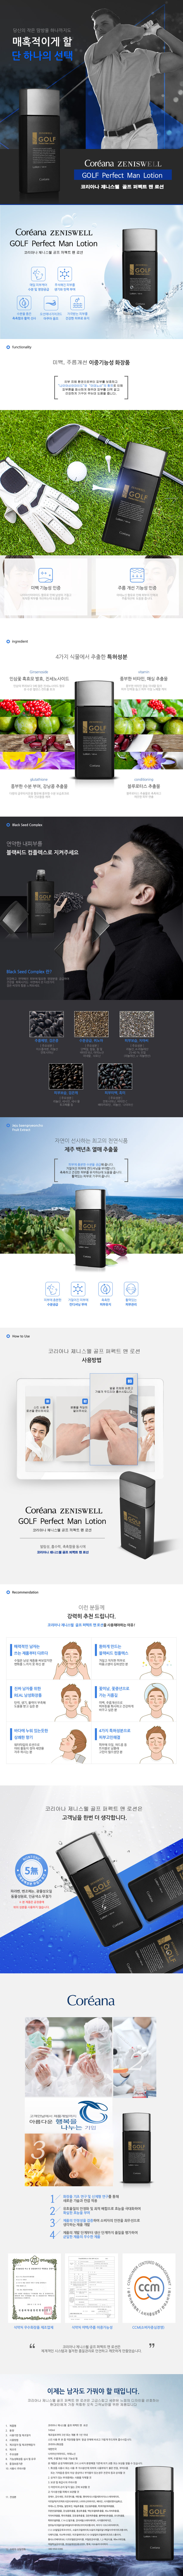 korean_lotion_detail.jpg